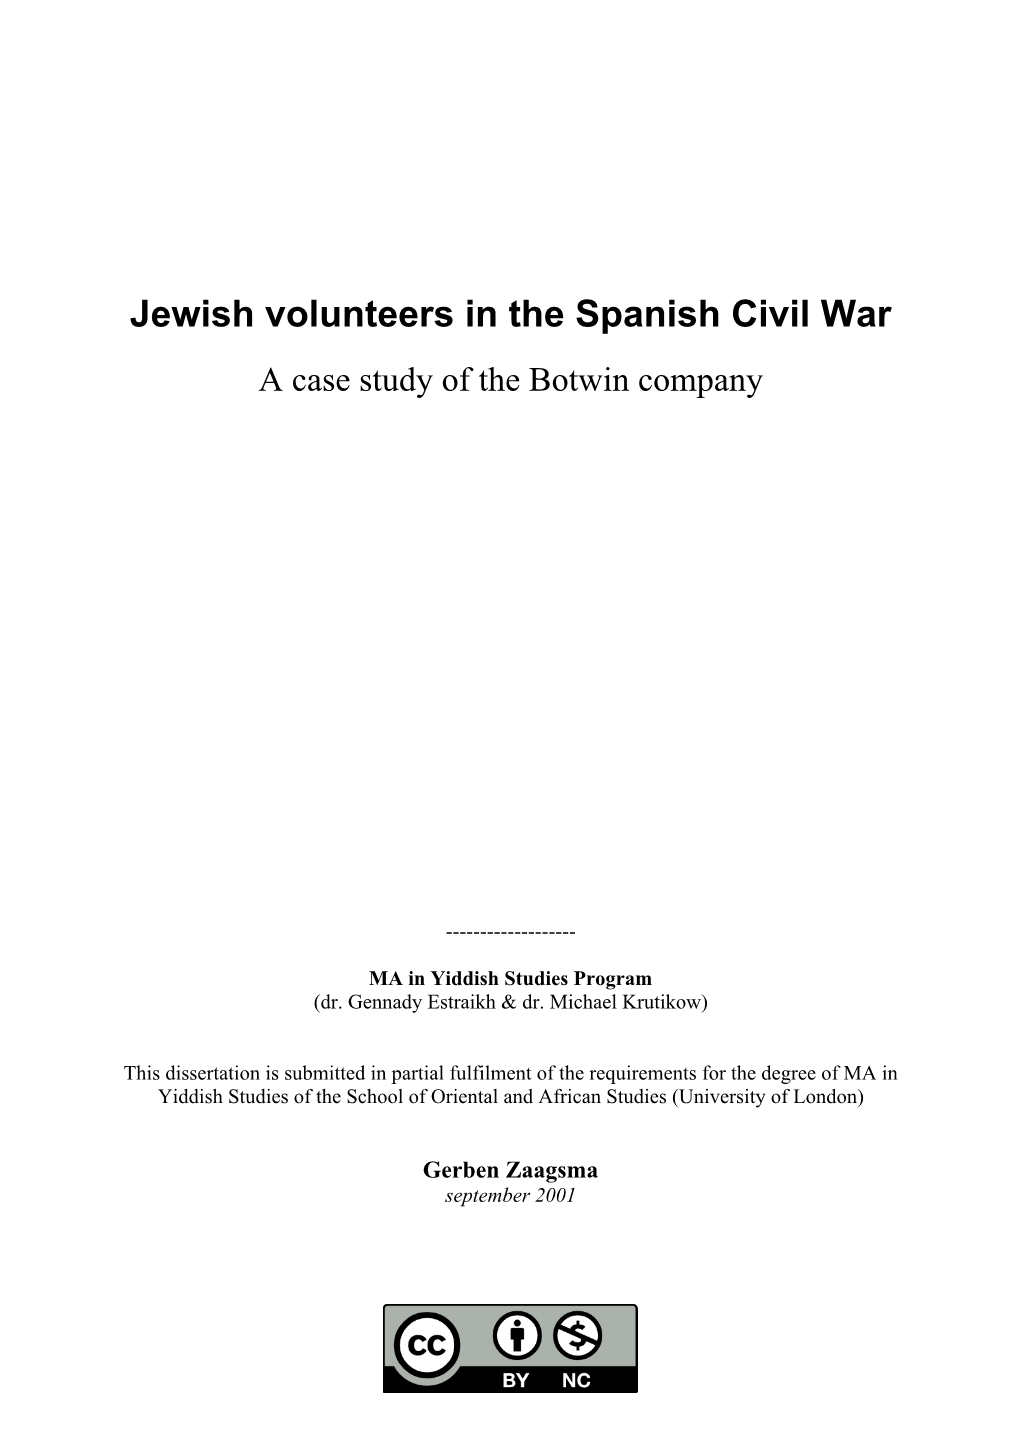 Jewish Volunteers in the Spanish Civil War. A